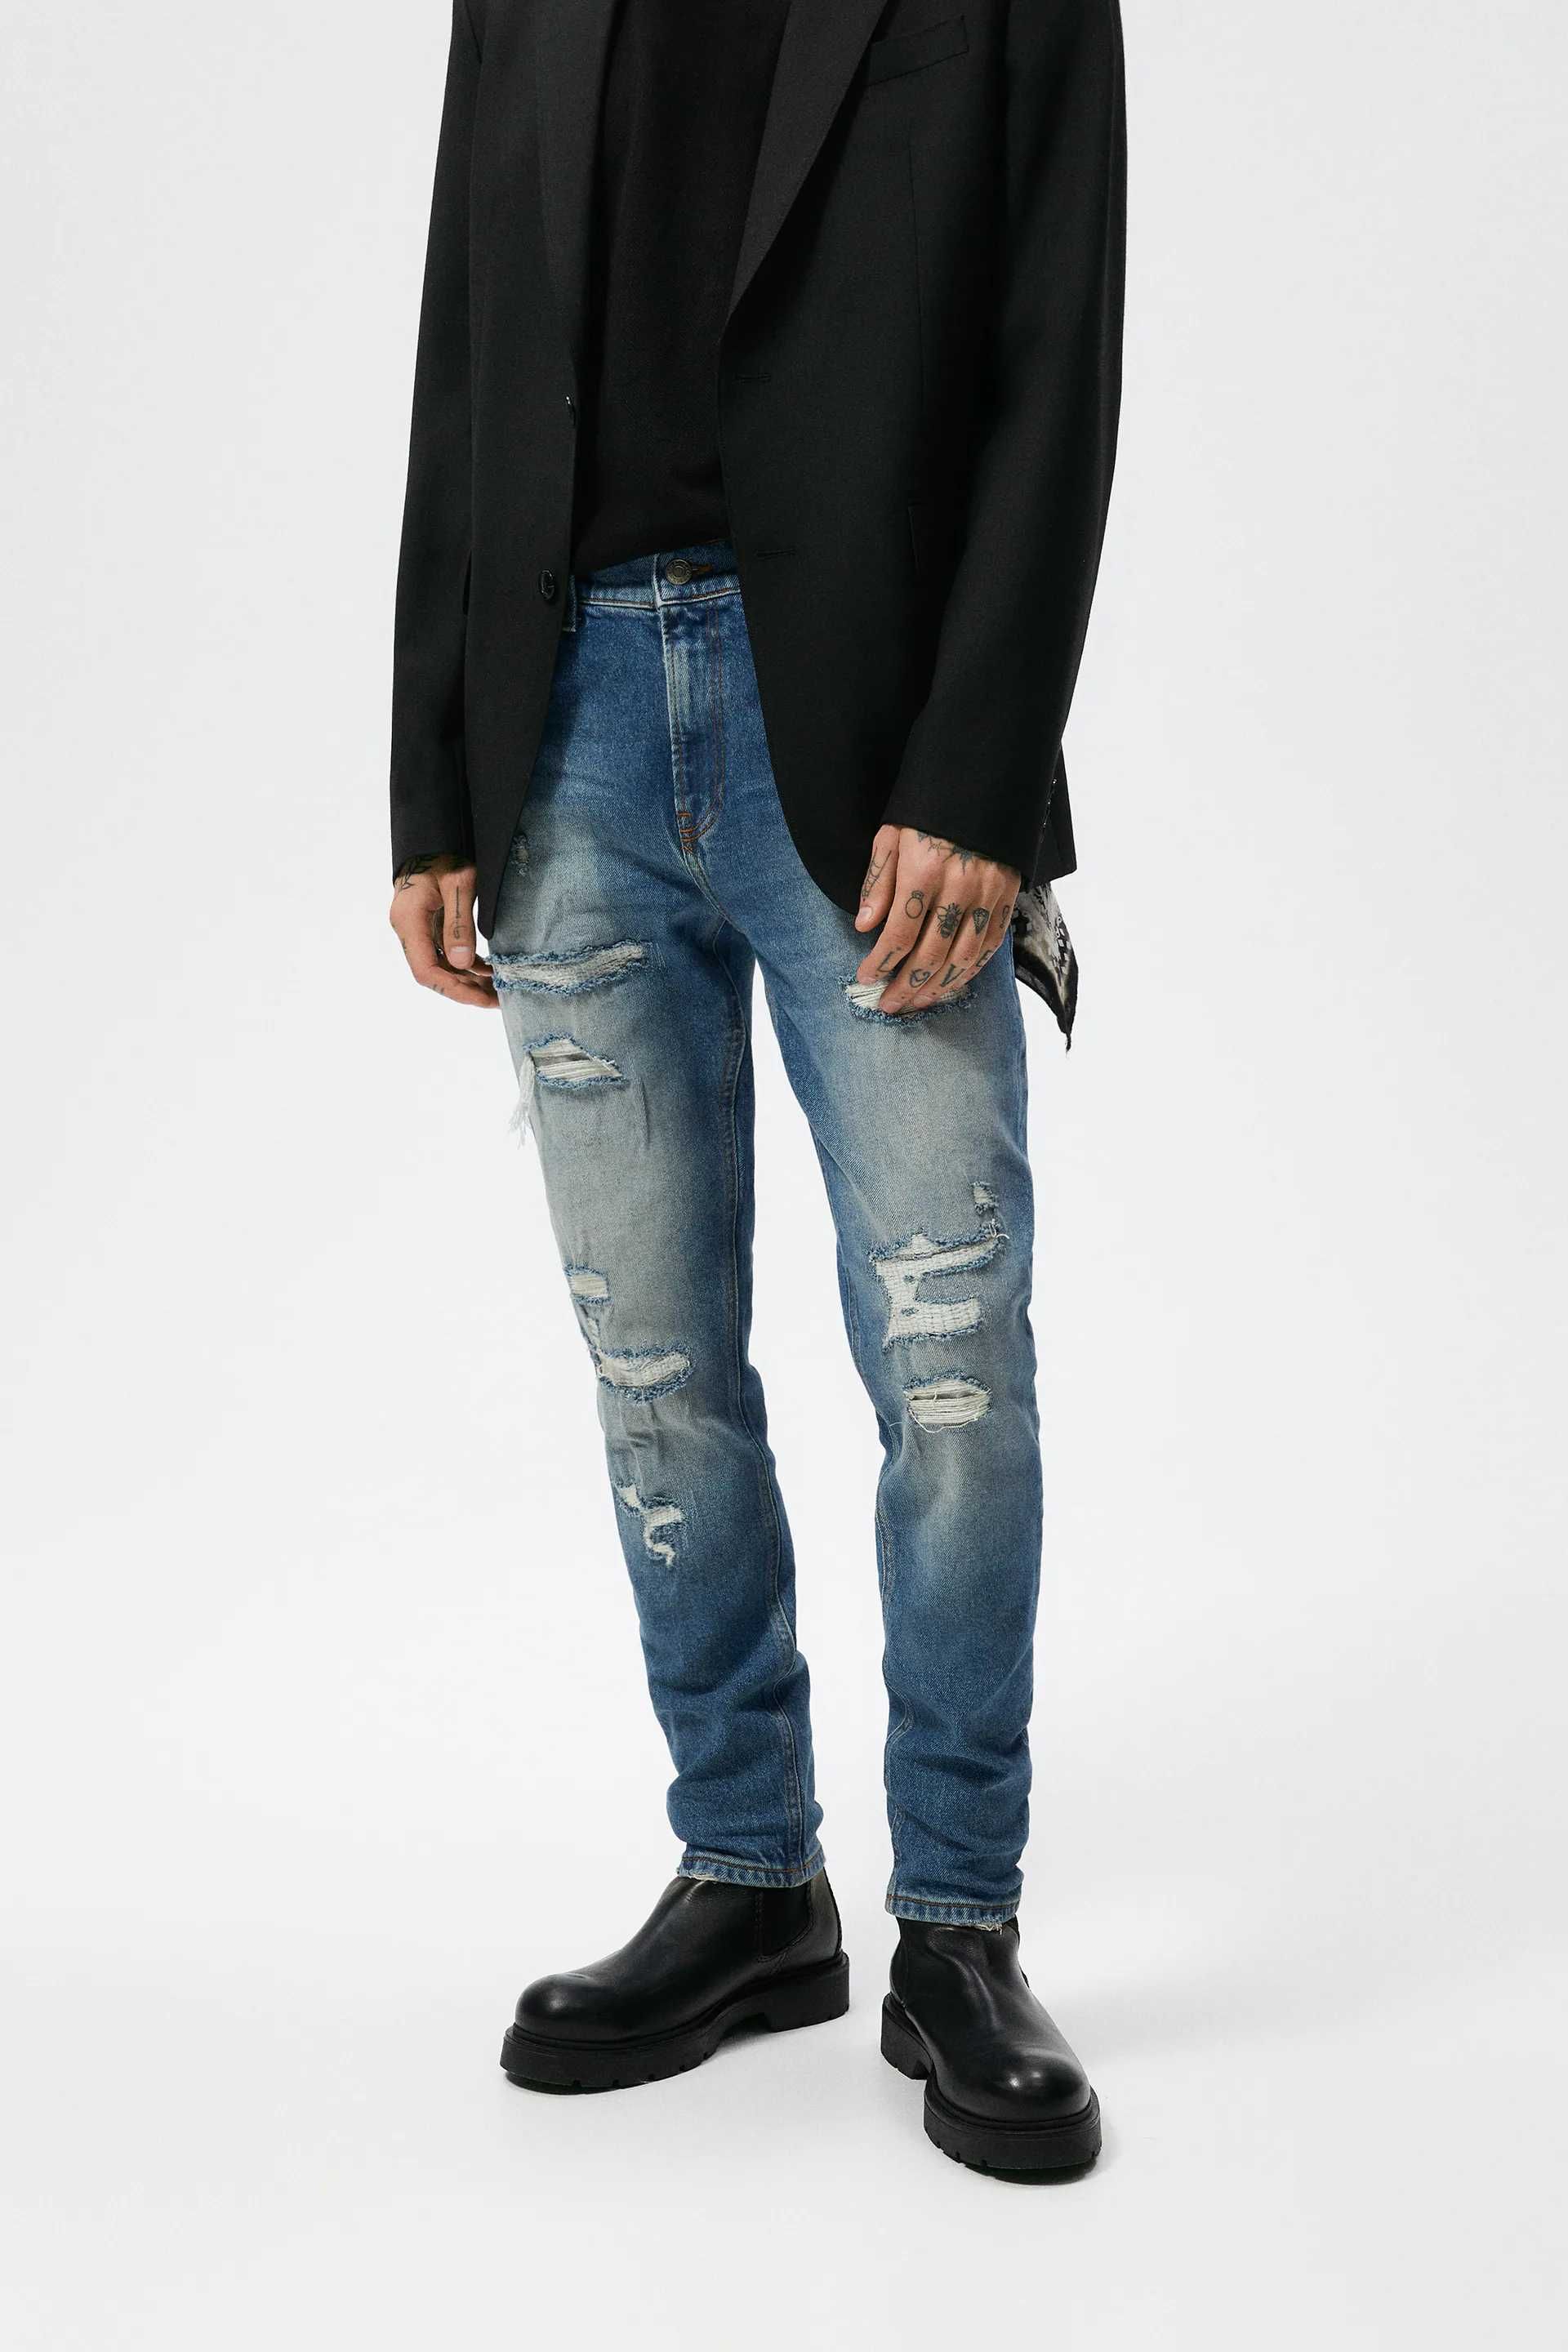 Spodnie jeansy o kroju skinny  z rozdarciami Zara rozmiar 40